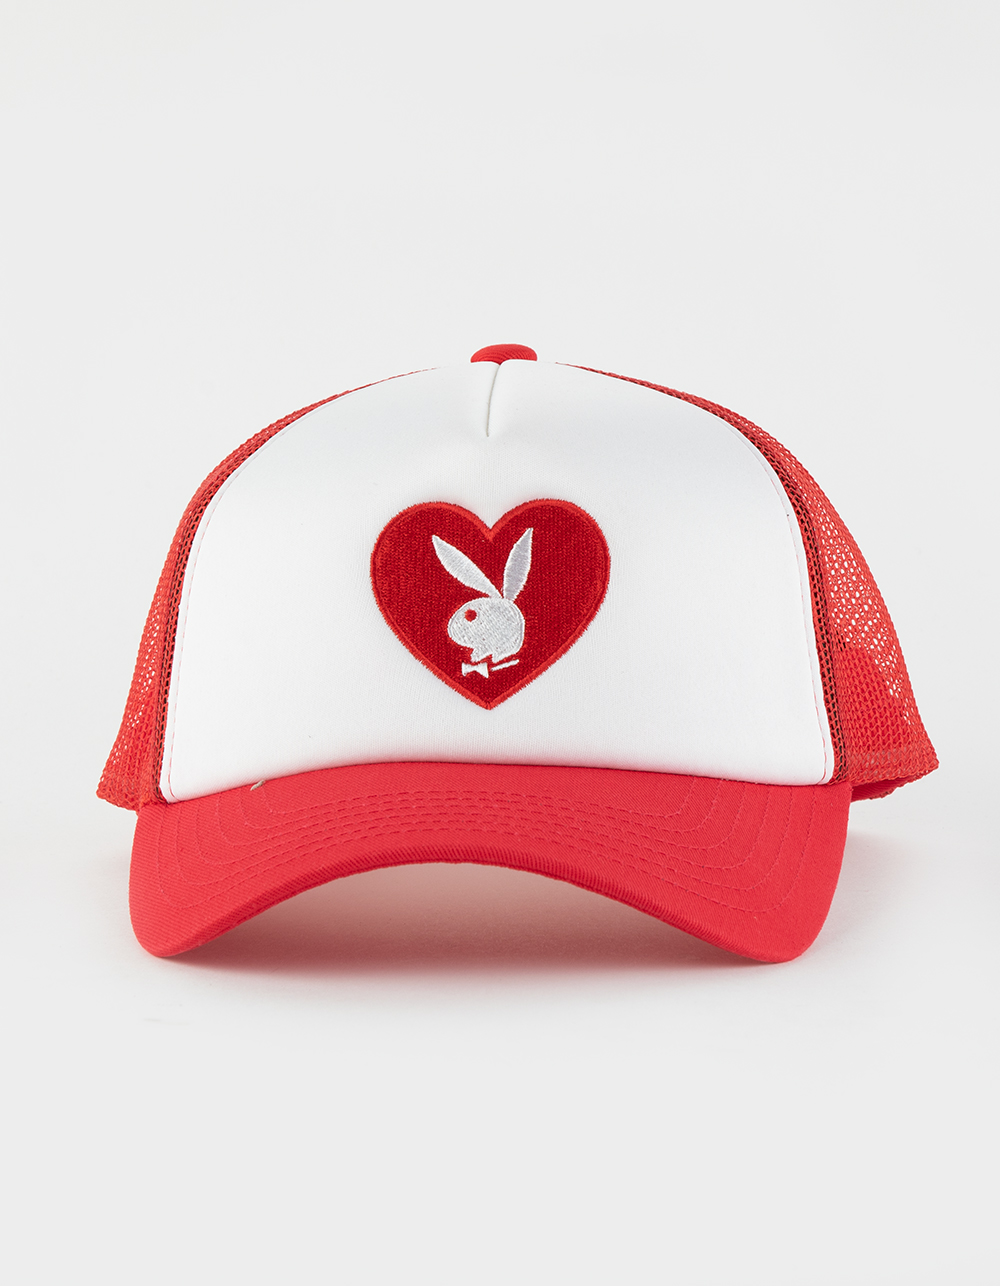 Playboy Heart Trucker Hat - Red - One Size